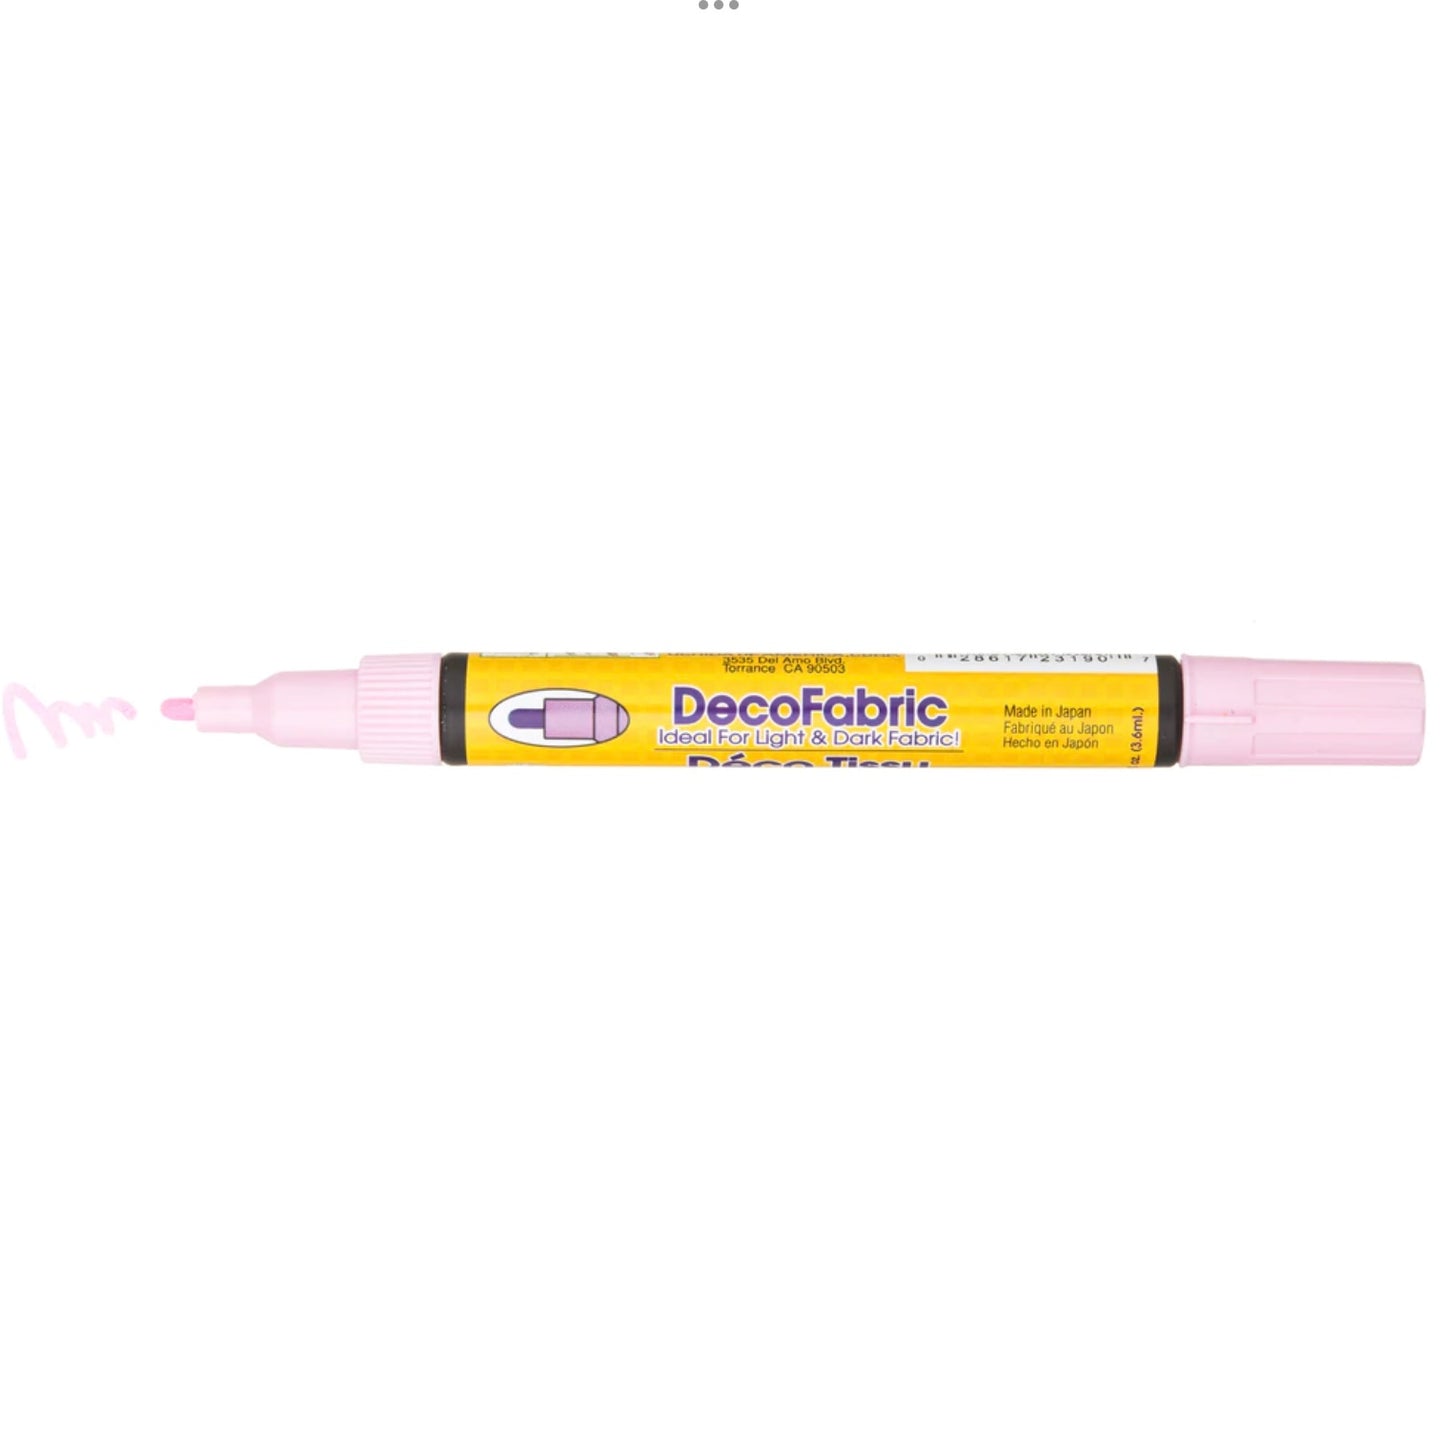 DecoFabric Fabric Markers - Pearl Pink by Marvy Uchida - K. A. Artist Shop